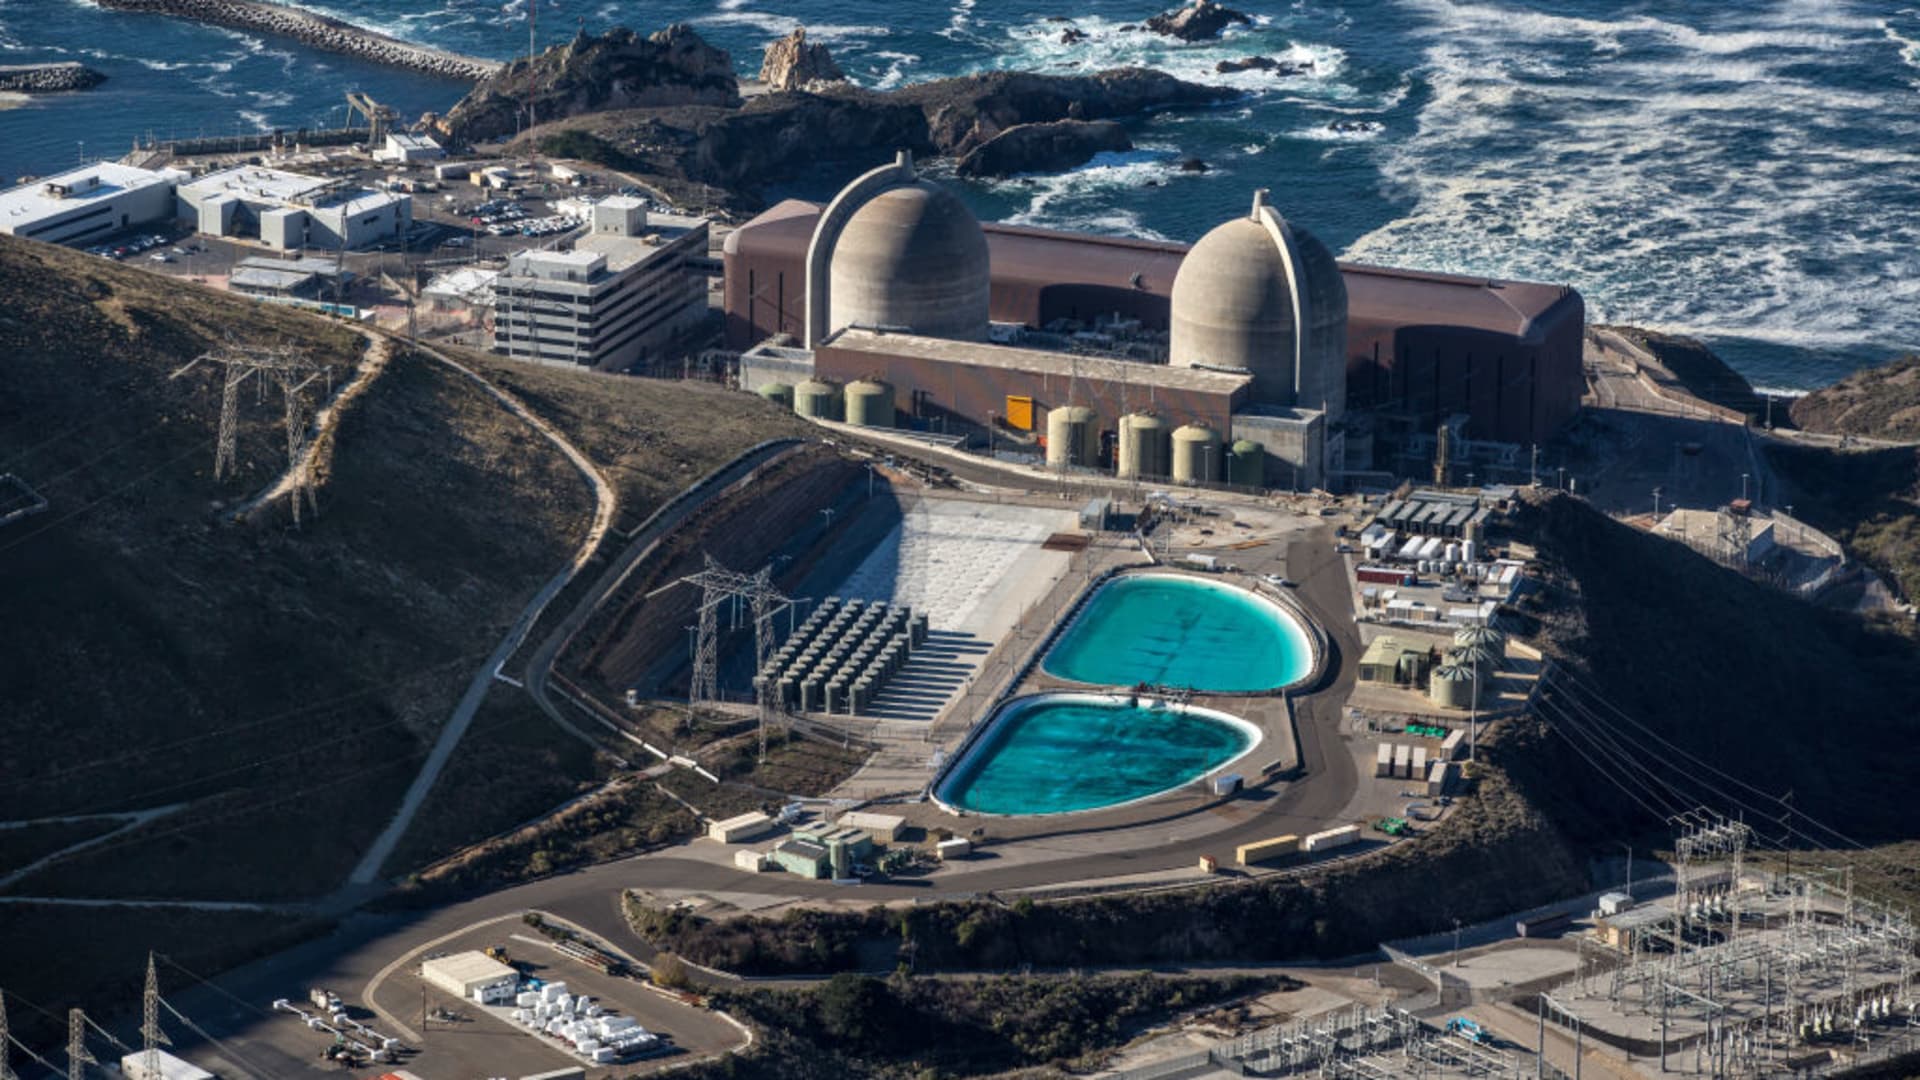 Biden grants PG&E .1 billion to keep Diablo Canyon nuclear plant open